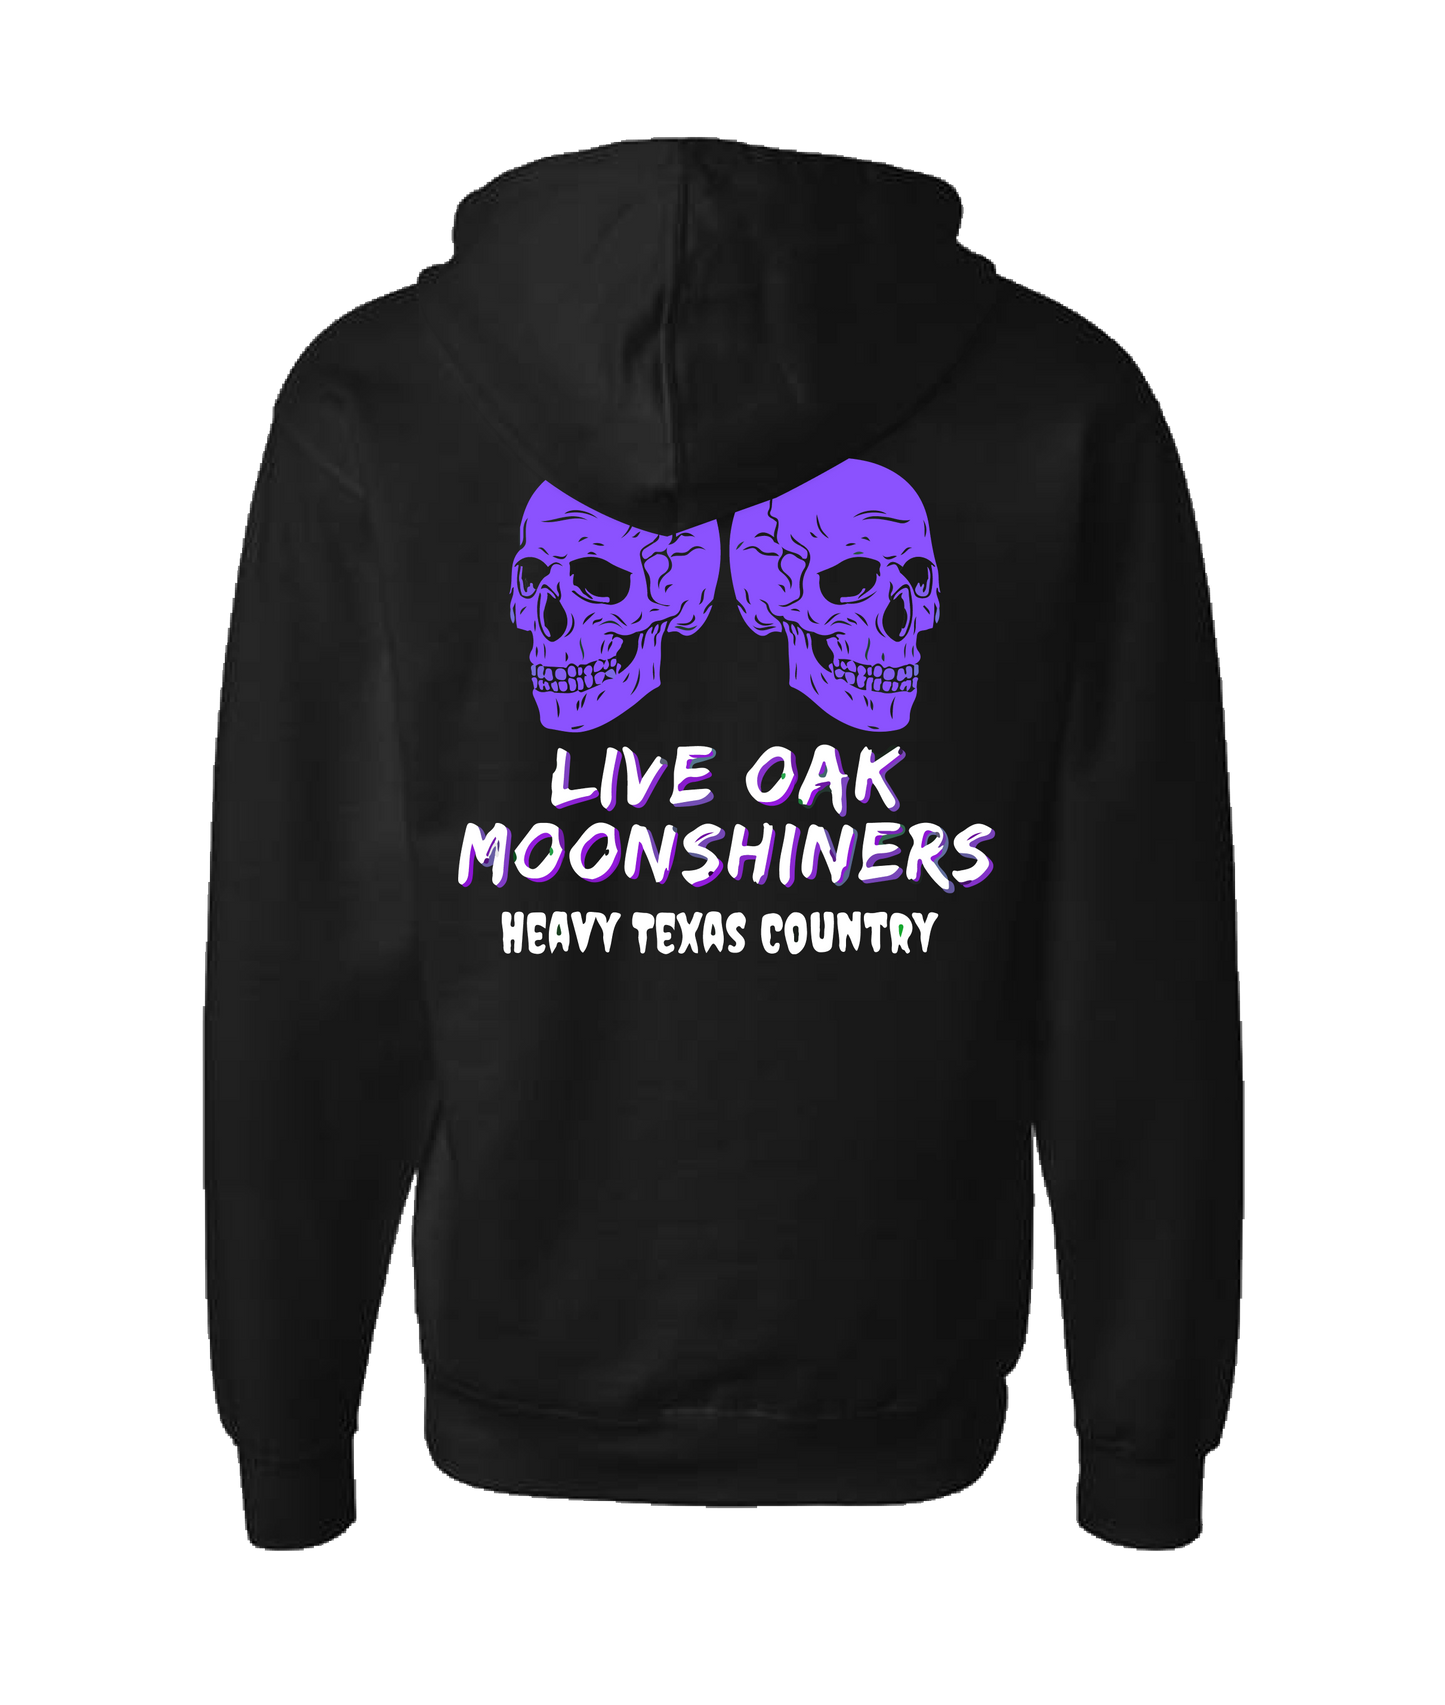 Live Oak Moonshiners - Heavy Texas Country - Black Zip Up Hoodie